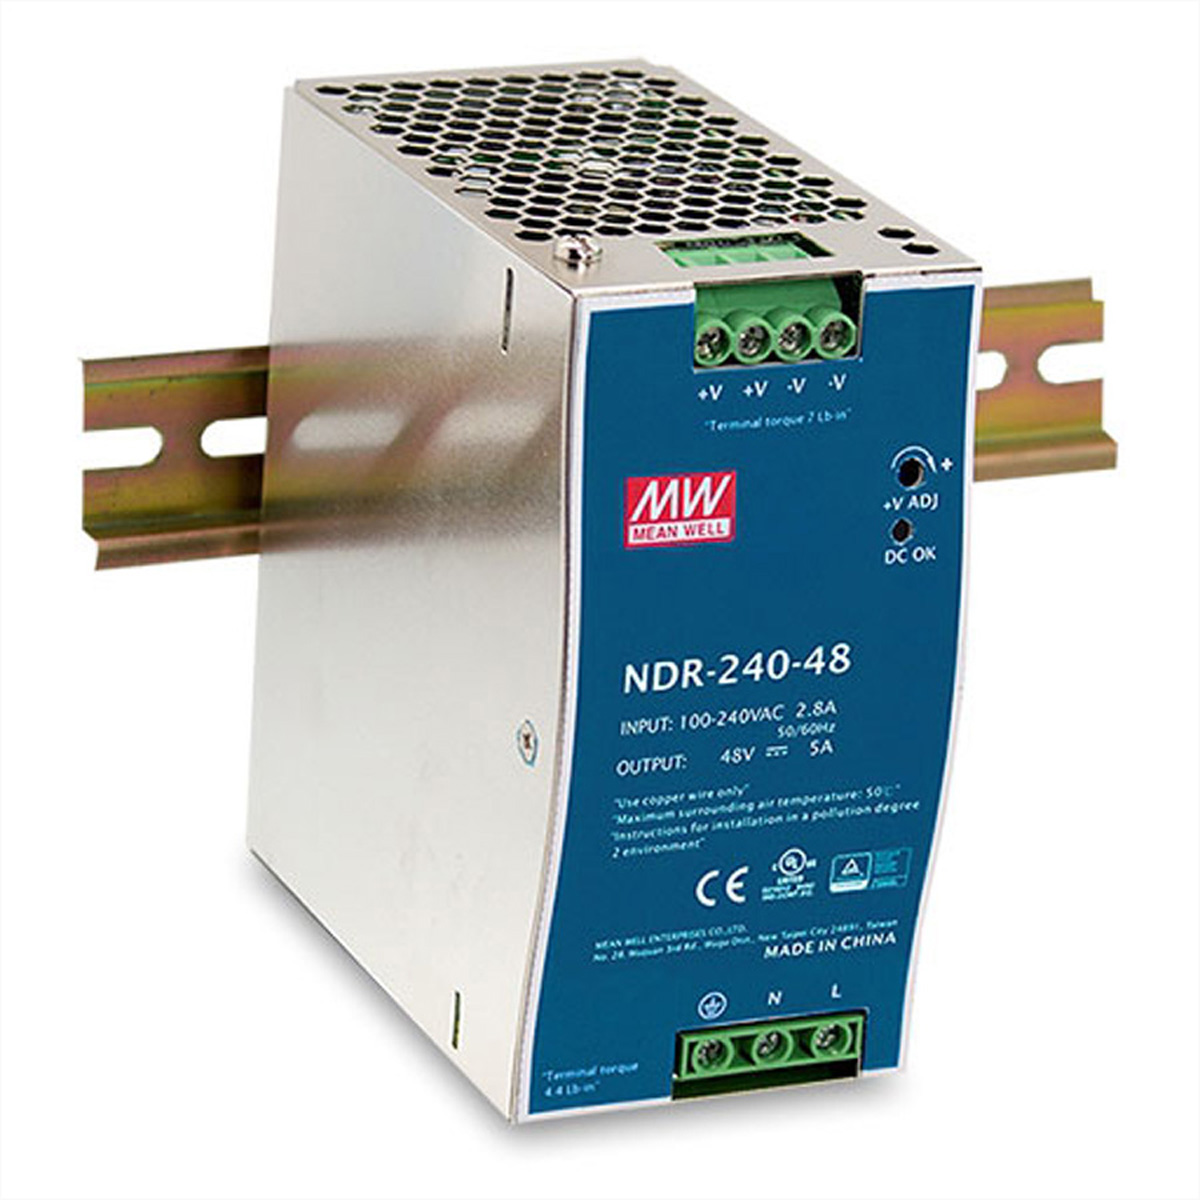 D-LINK 480W Universal AC input / Full range